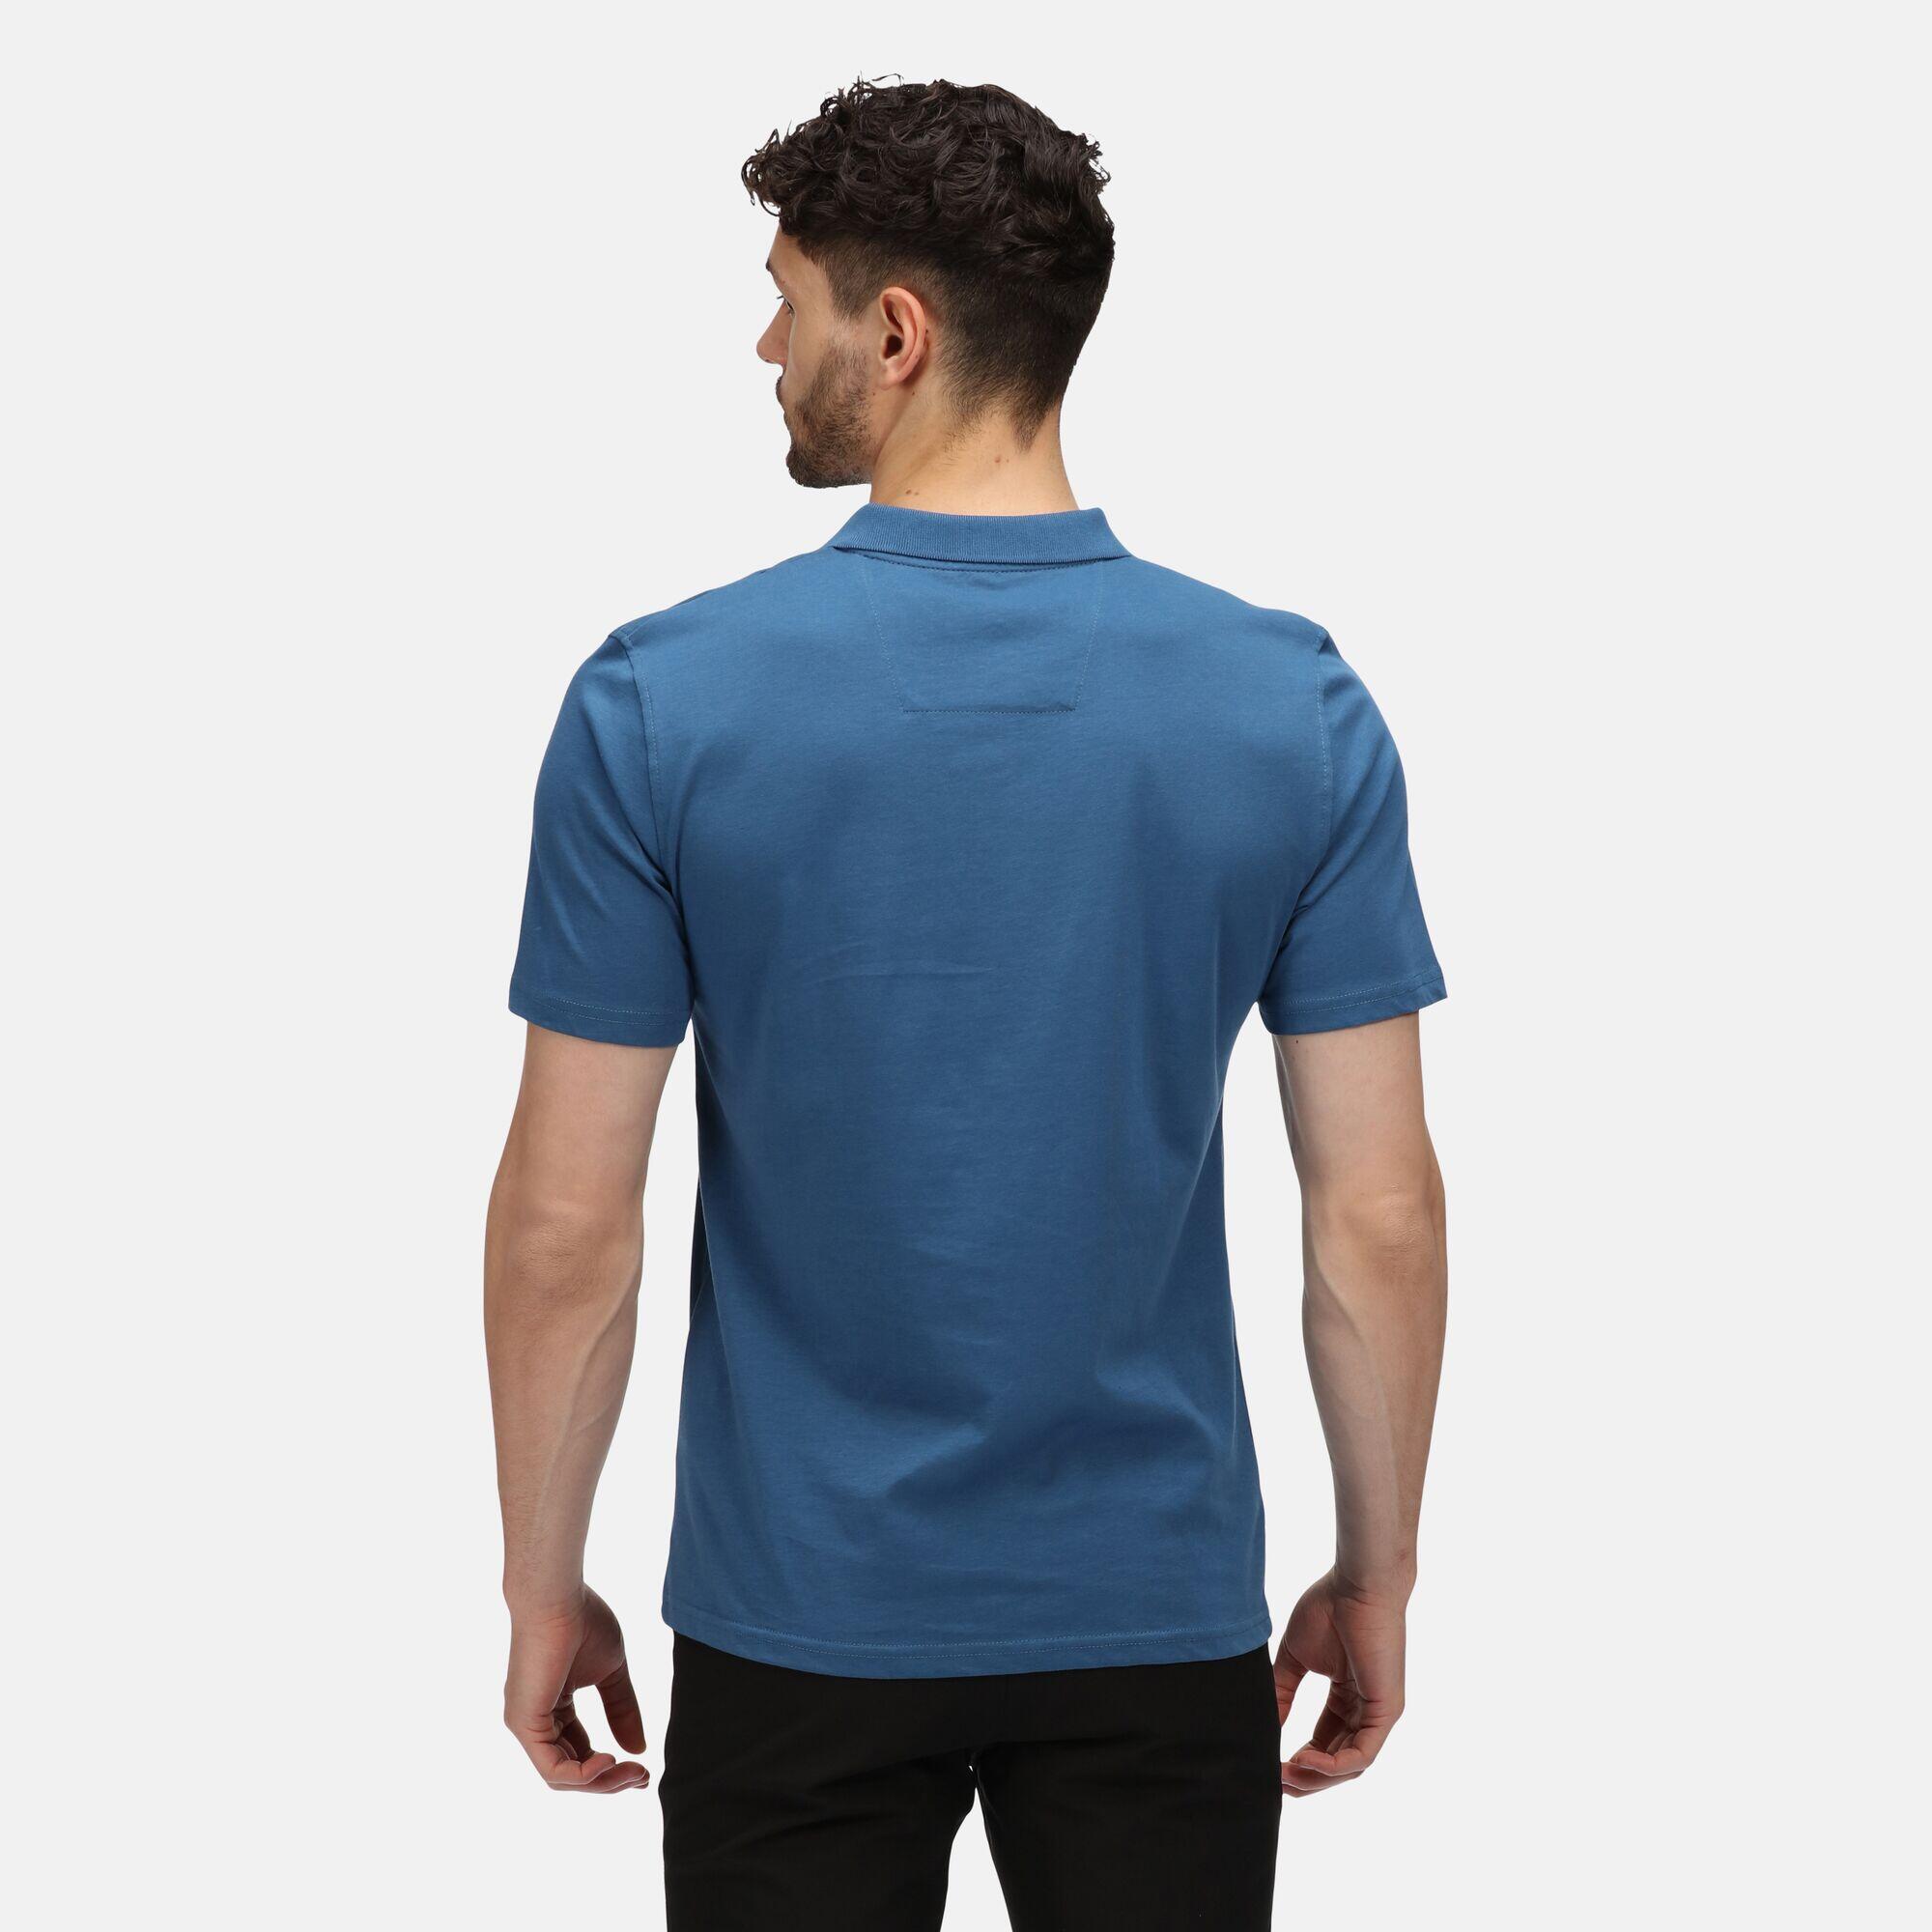 Sinton Men's Fitness Short Sleeve Polo Shirt - Dynasty Blue 2/5